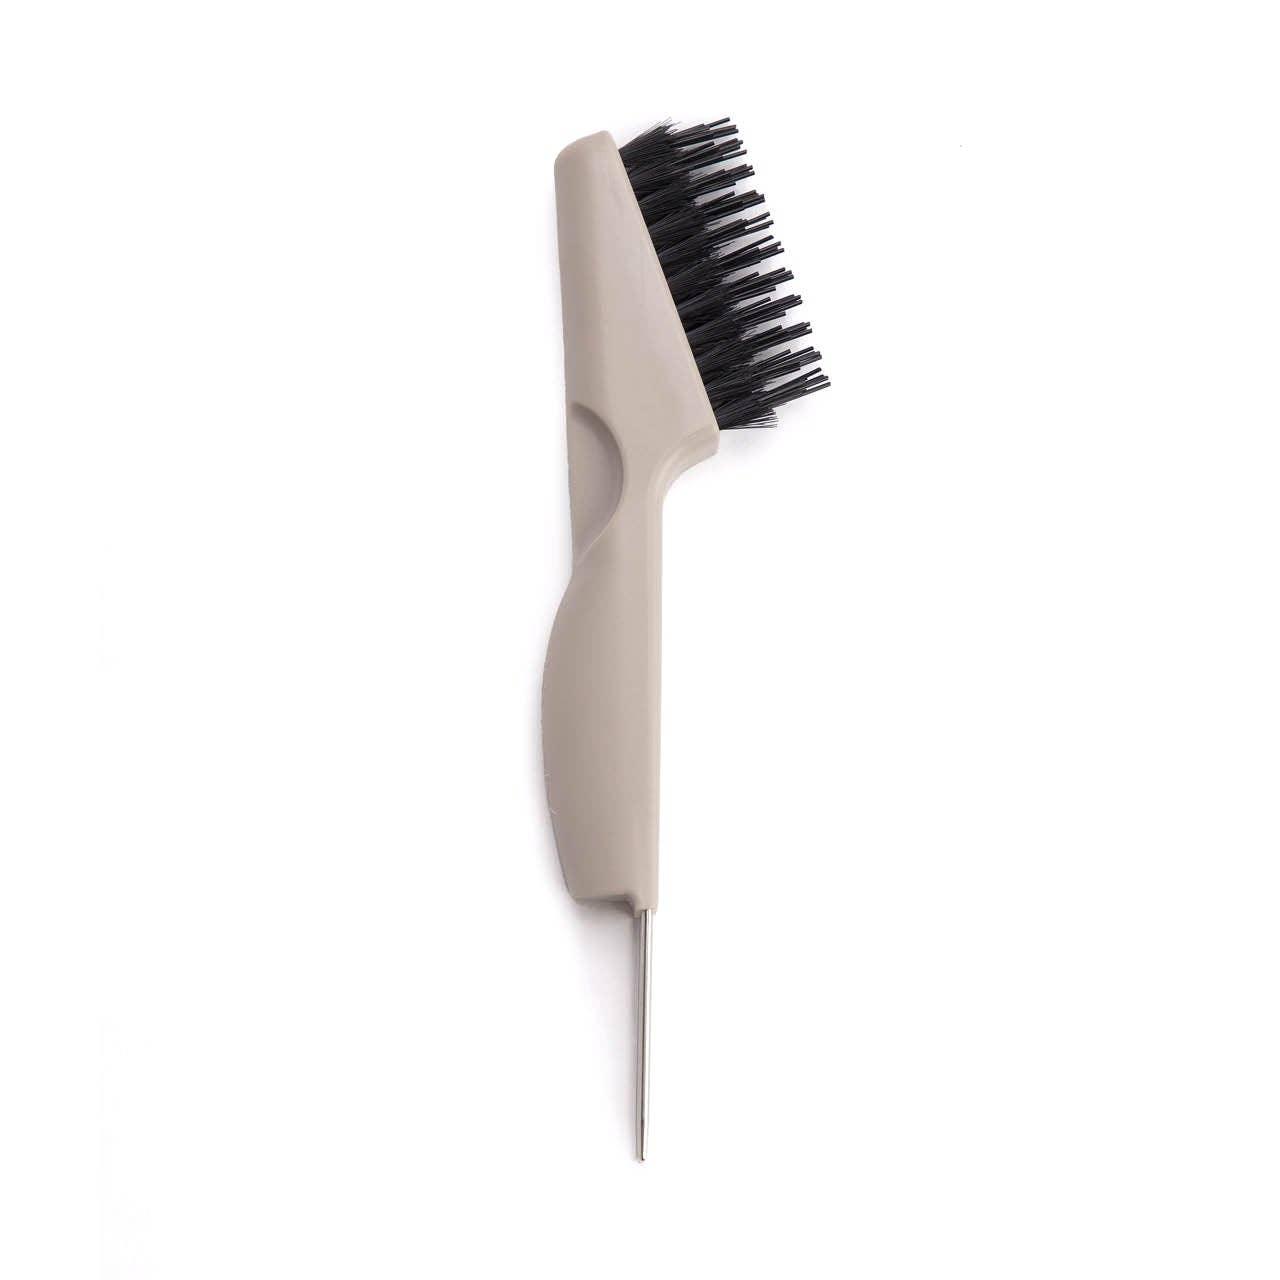 Hair Brush Cleaner - The Silver Dahlia